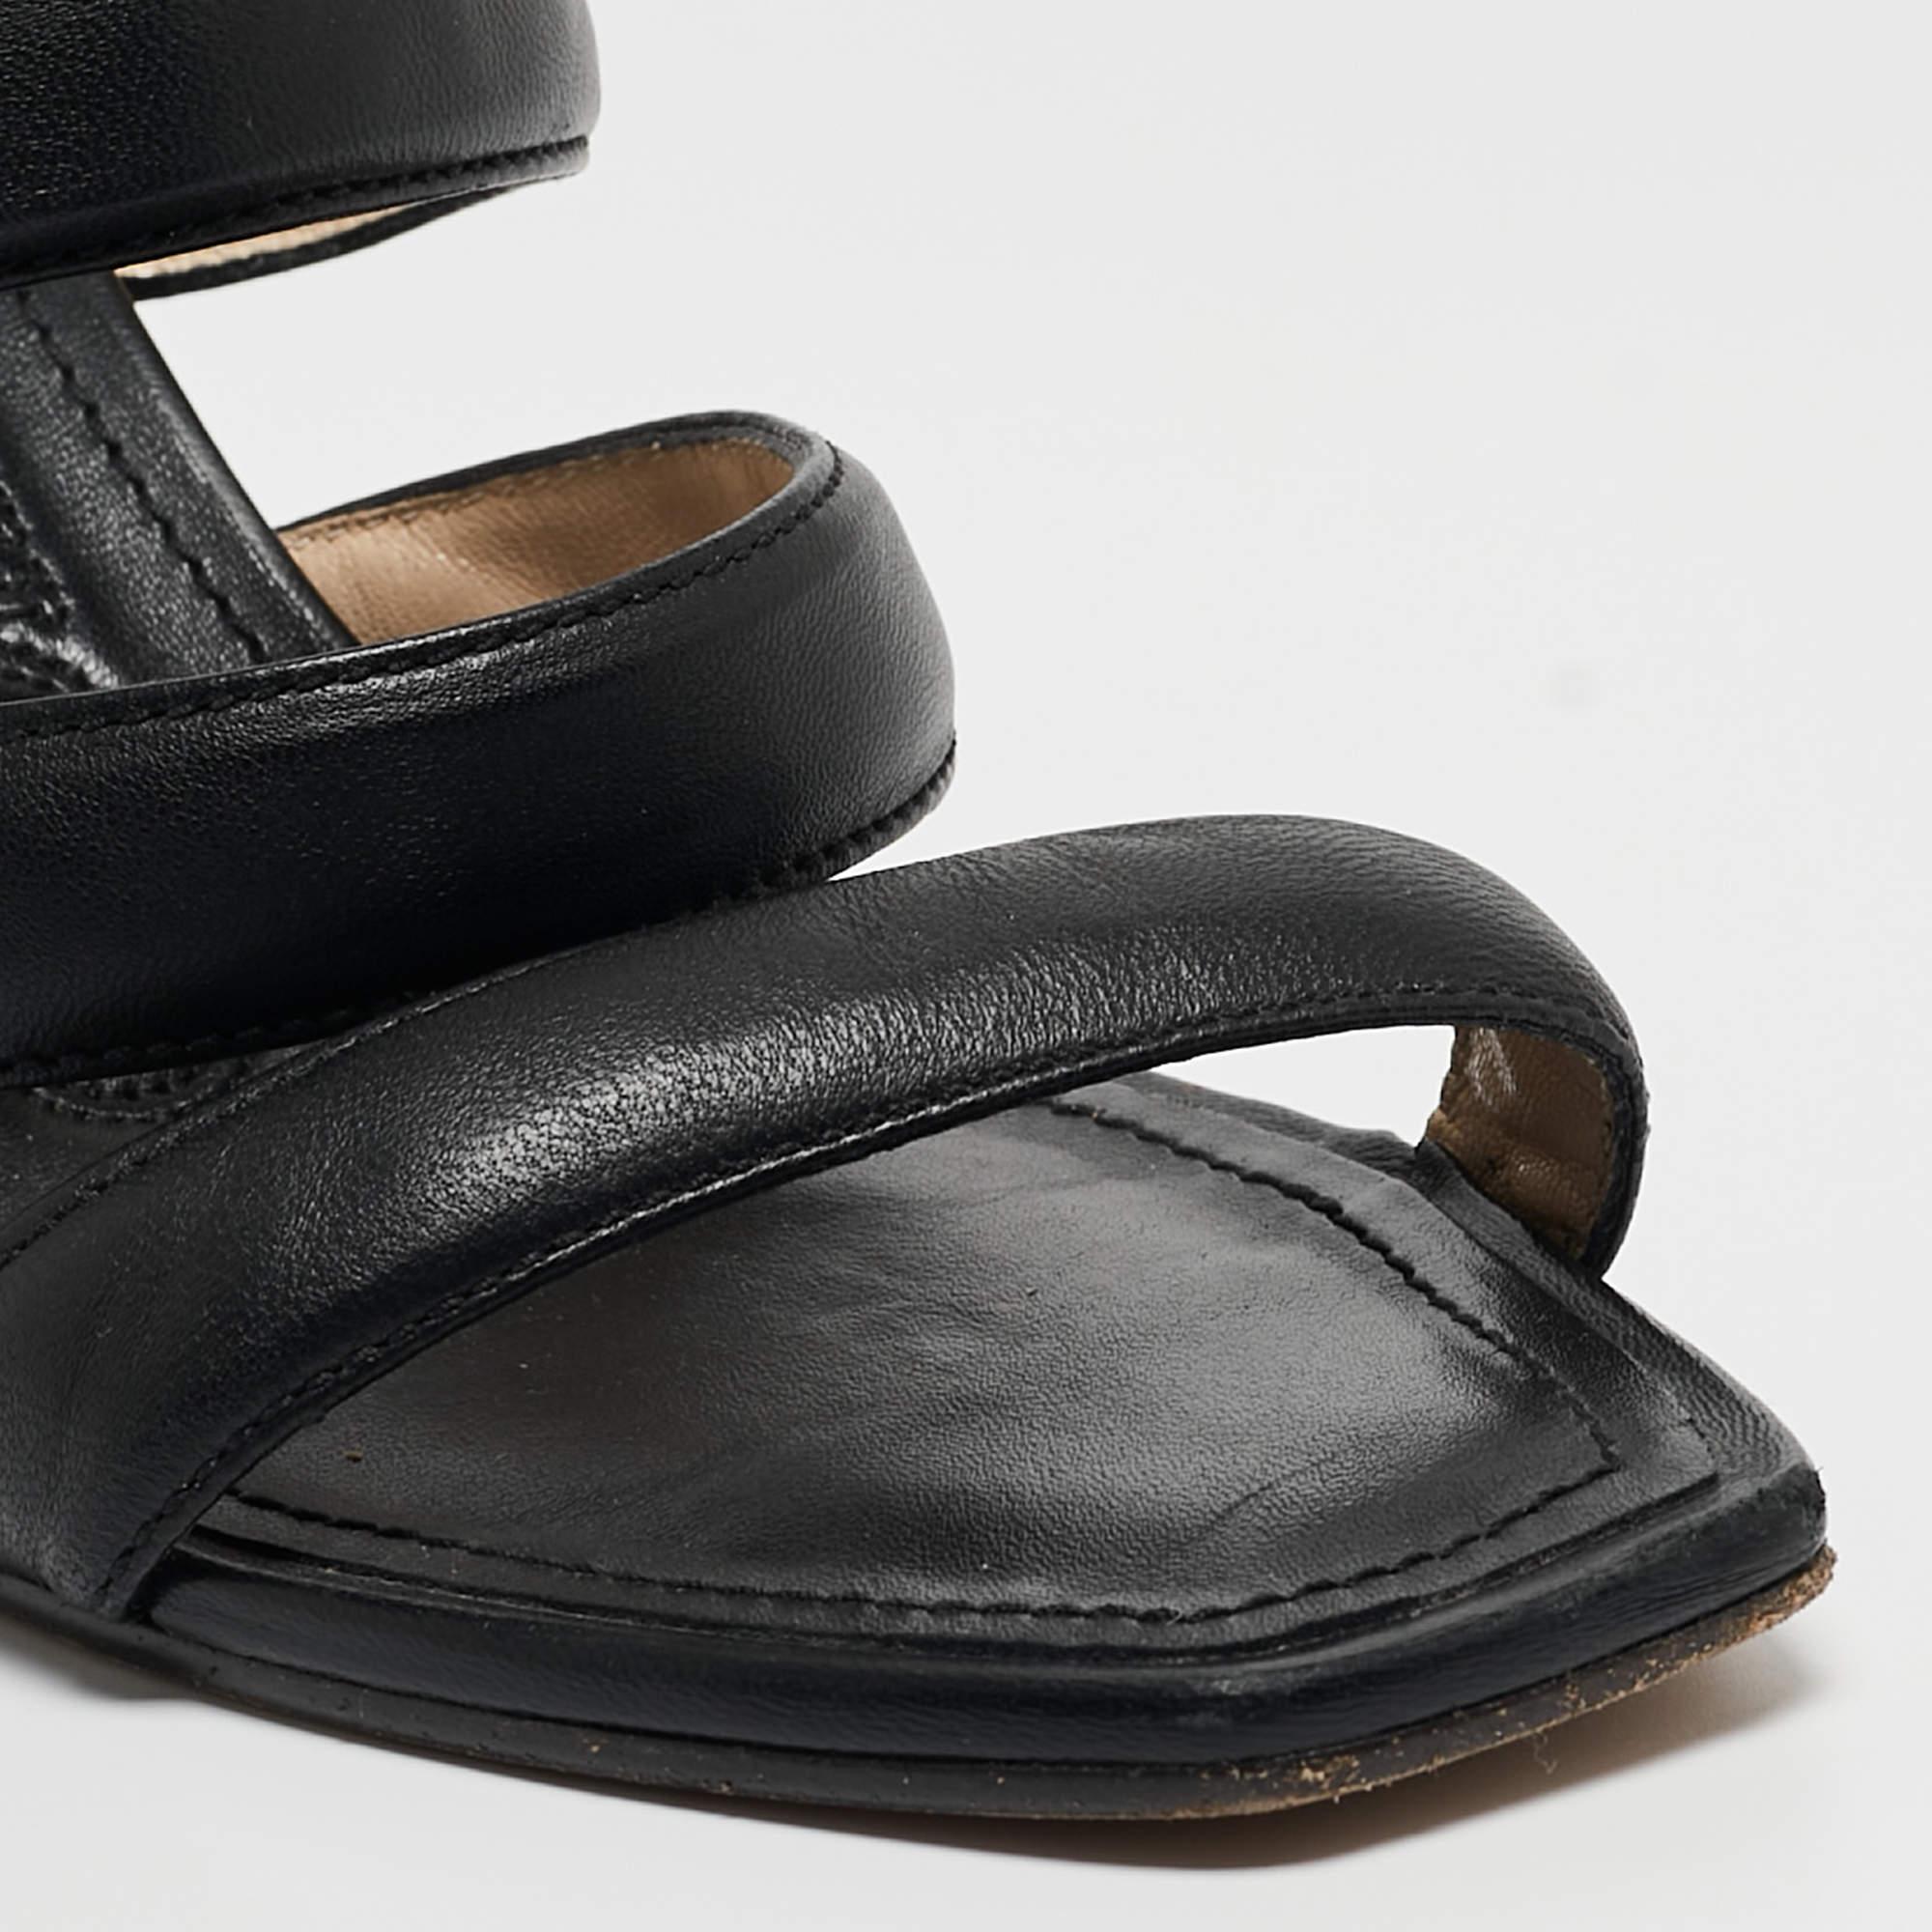 Jimmy Choo Black Leather Auna Slide Sandals Size 38.5 1